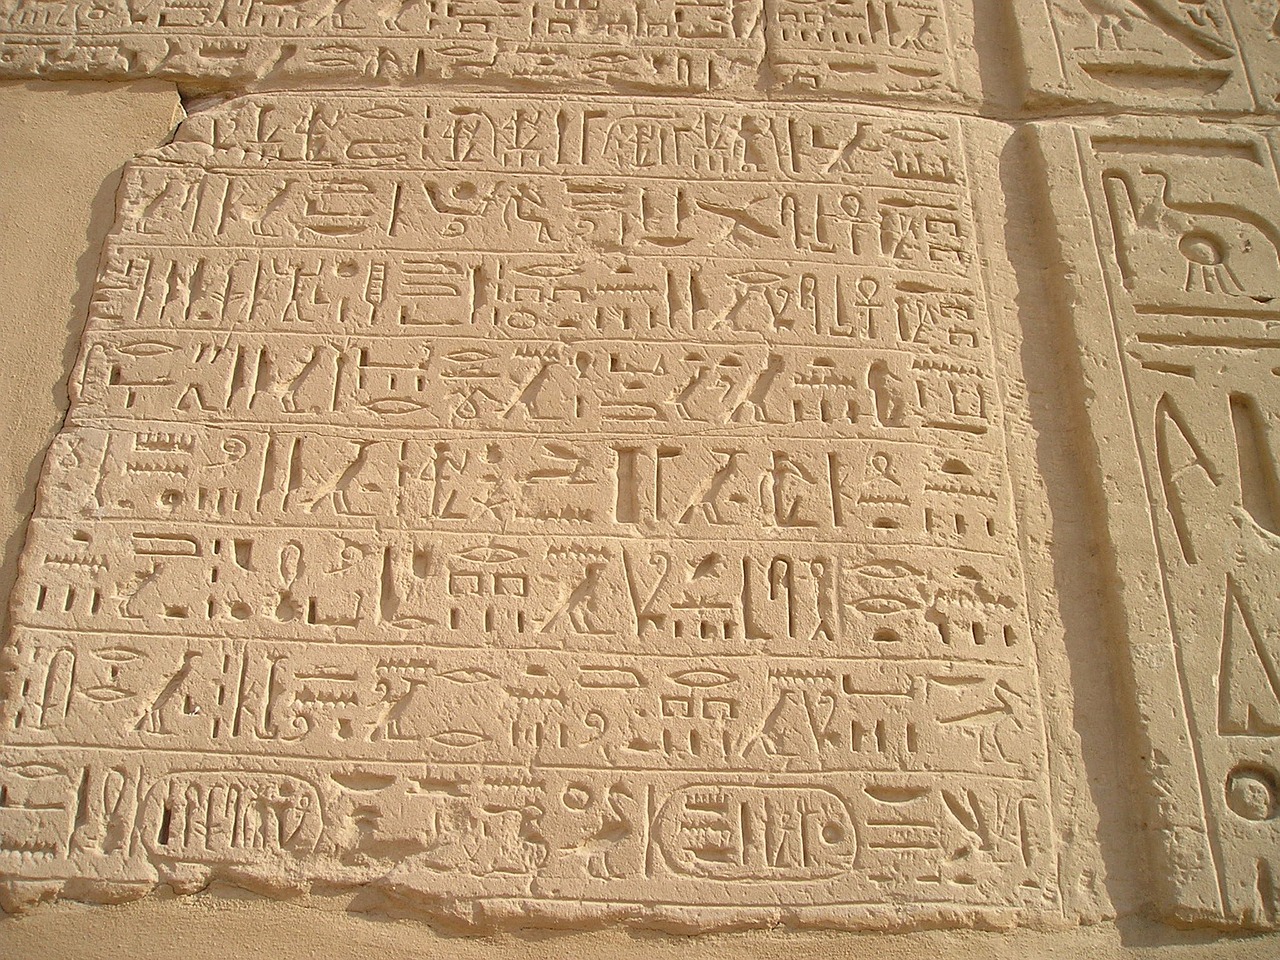 Heiroglyphs